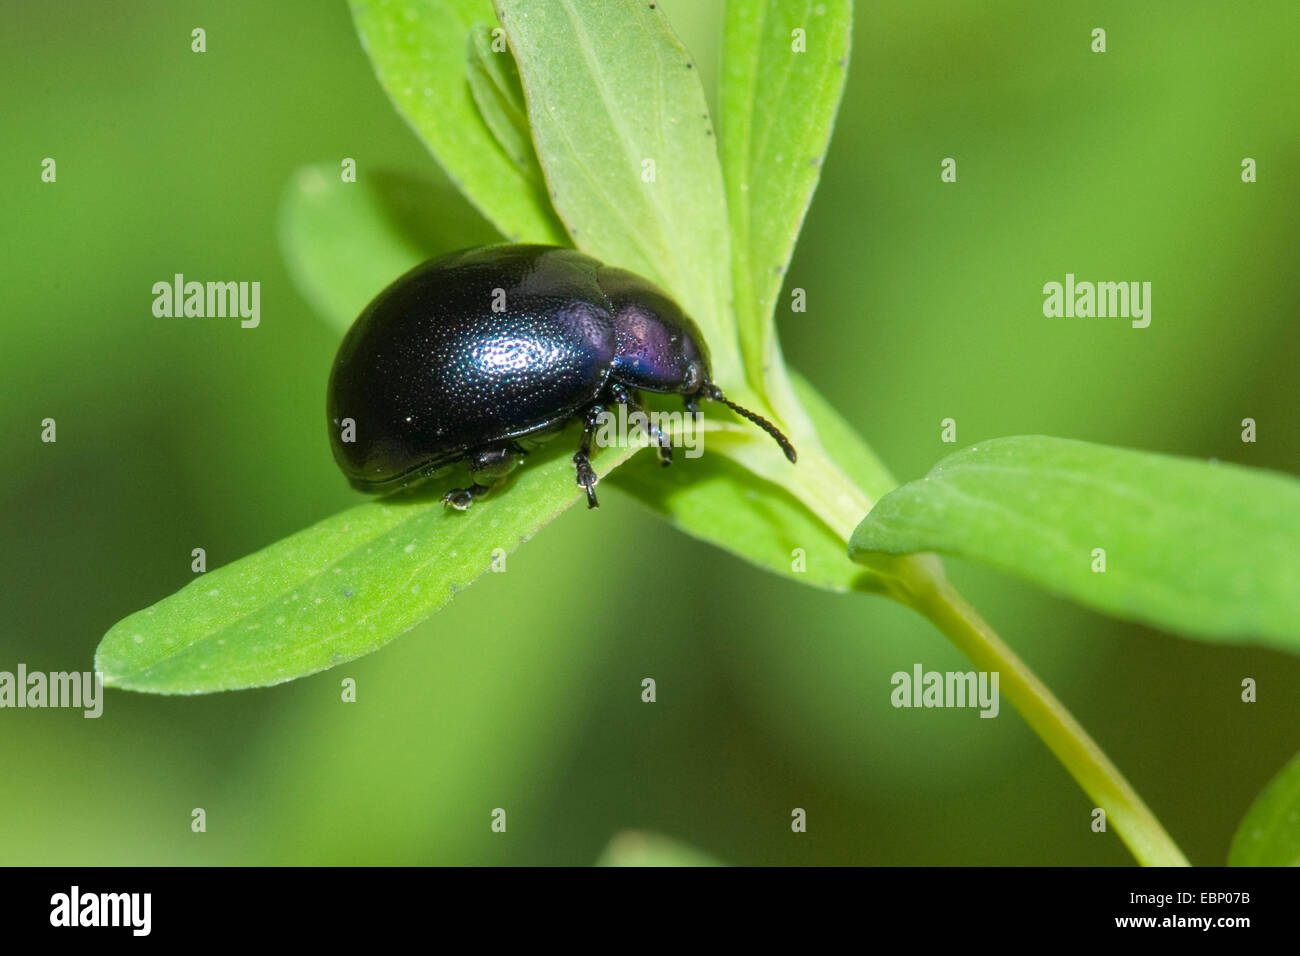 Leaf Beetle (Chrysolina varians), on a leaf, Germany Stock Photo